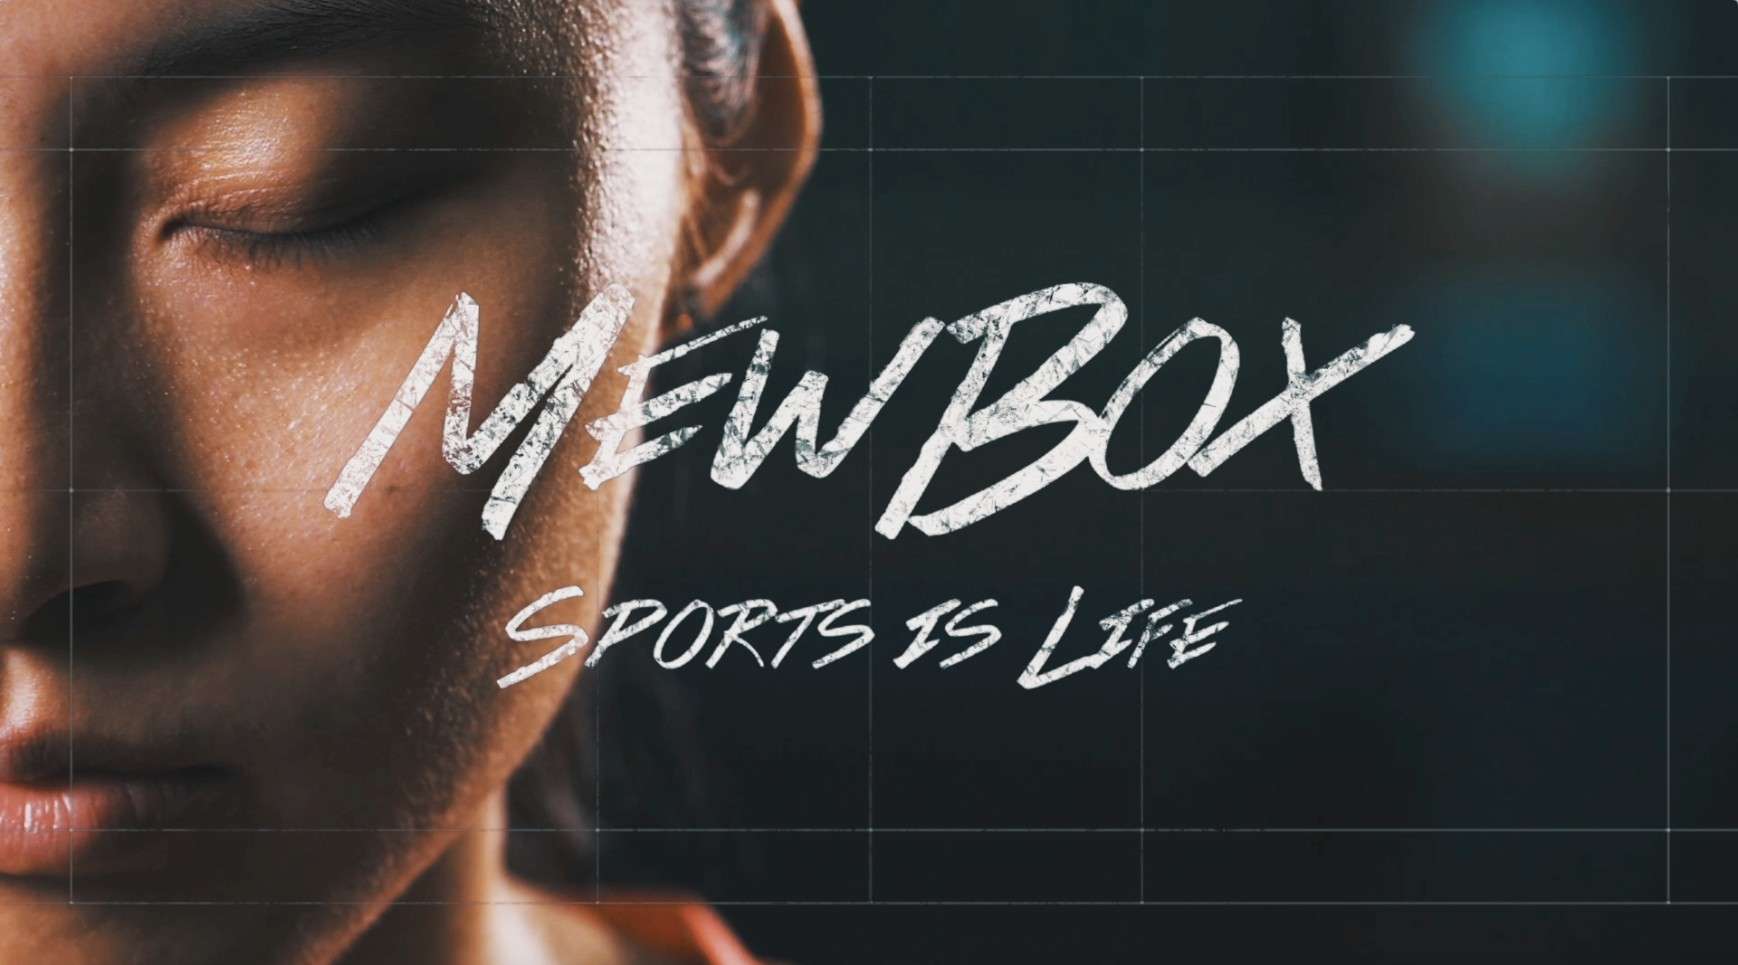 MewBox -Sports is life - 王仪涵